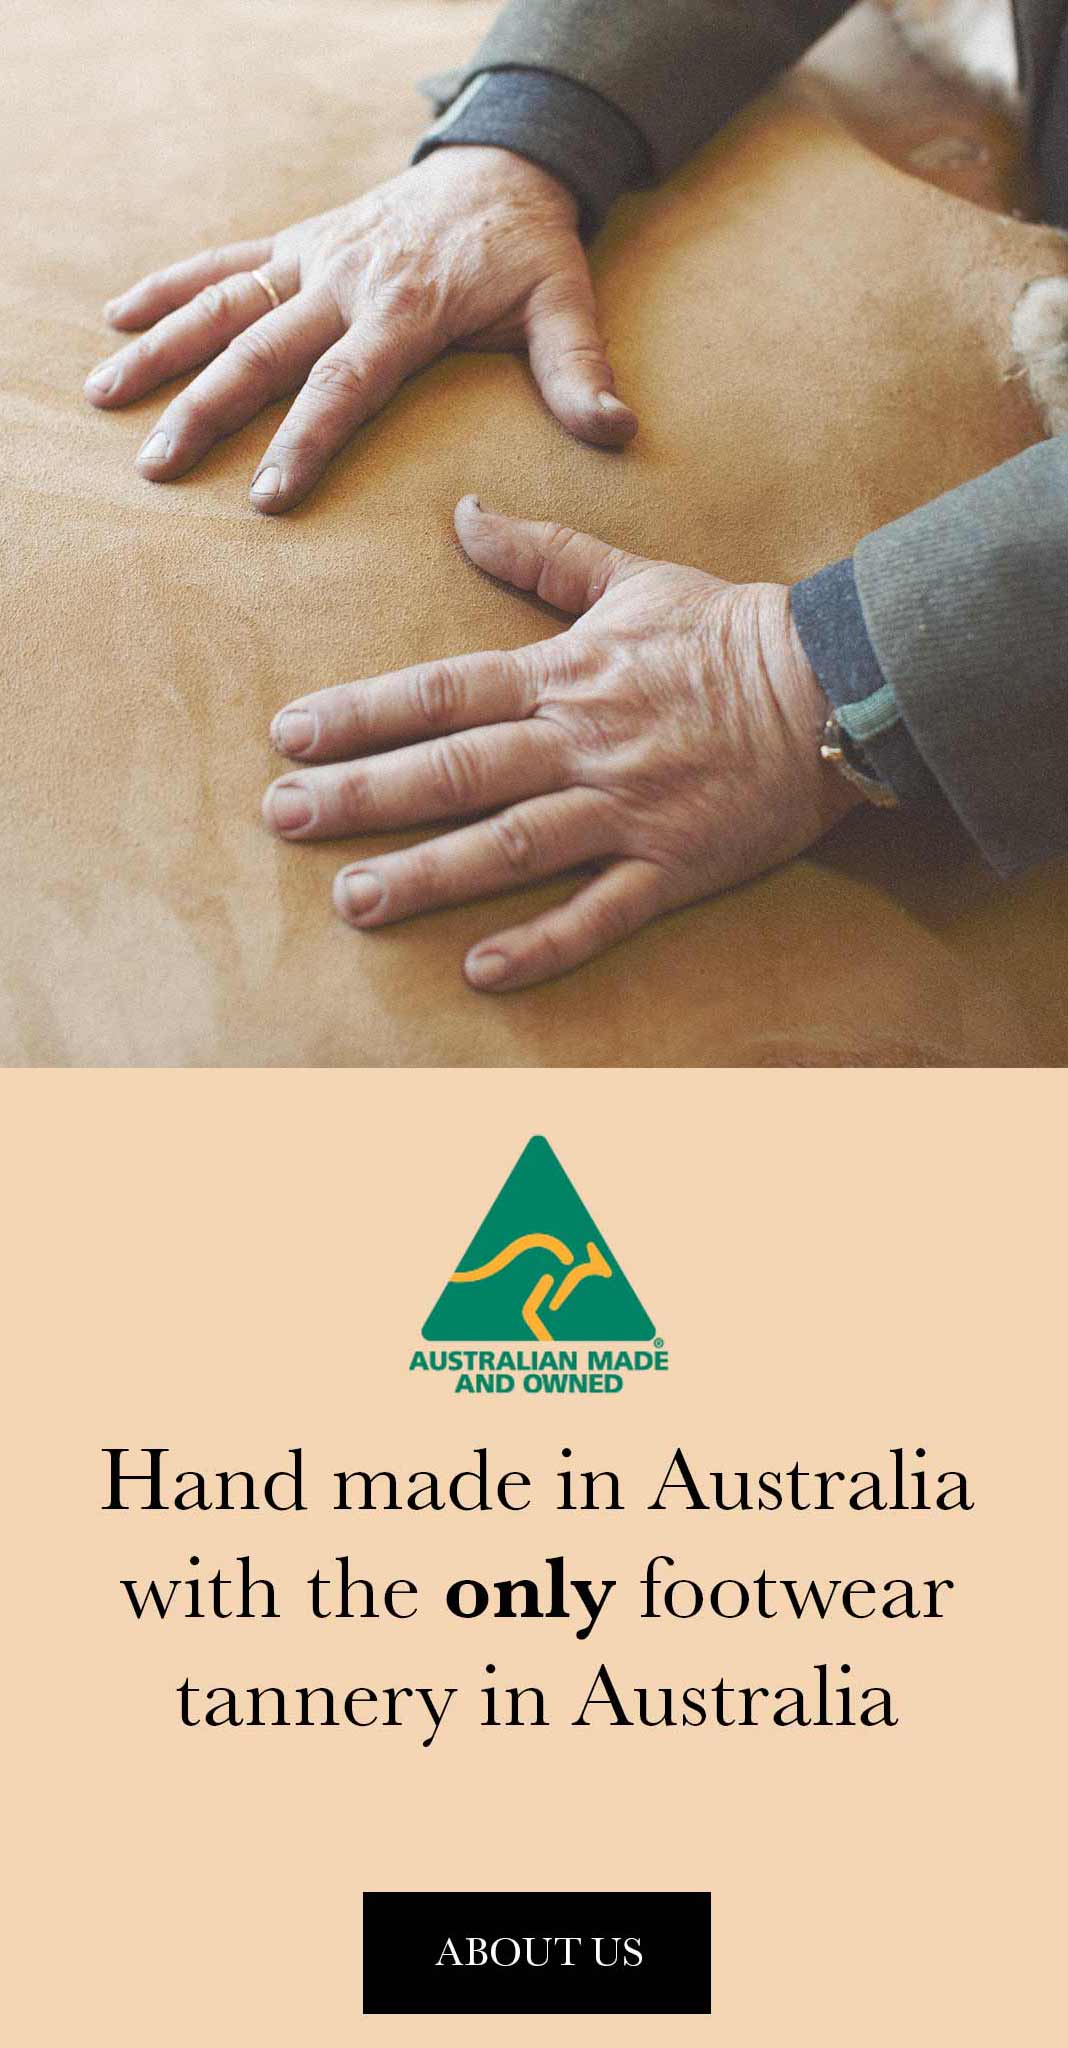 ugg australia by hand